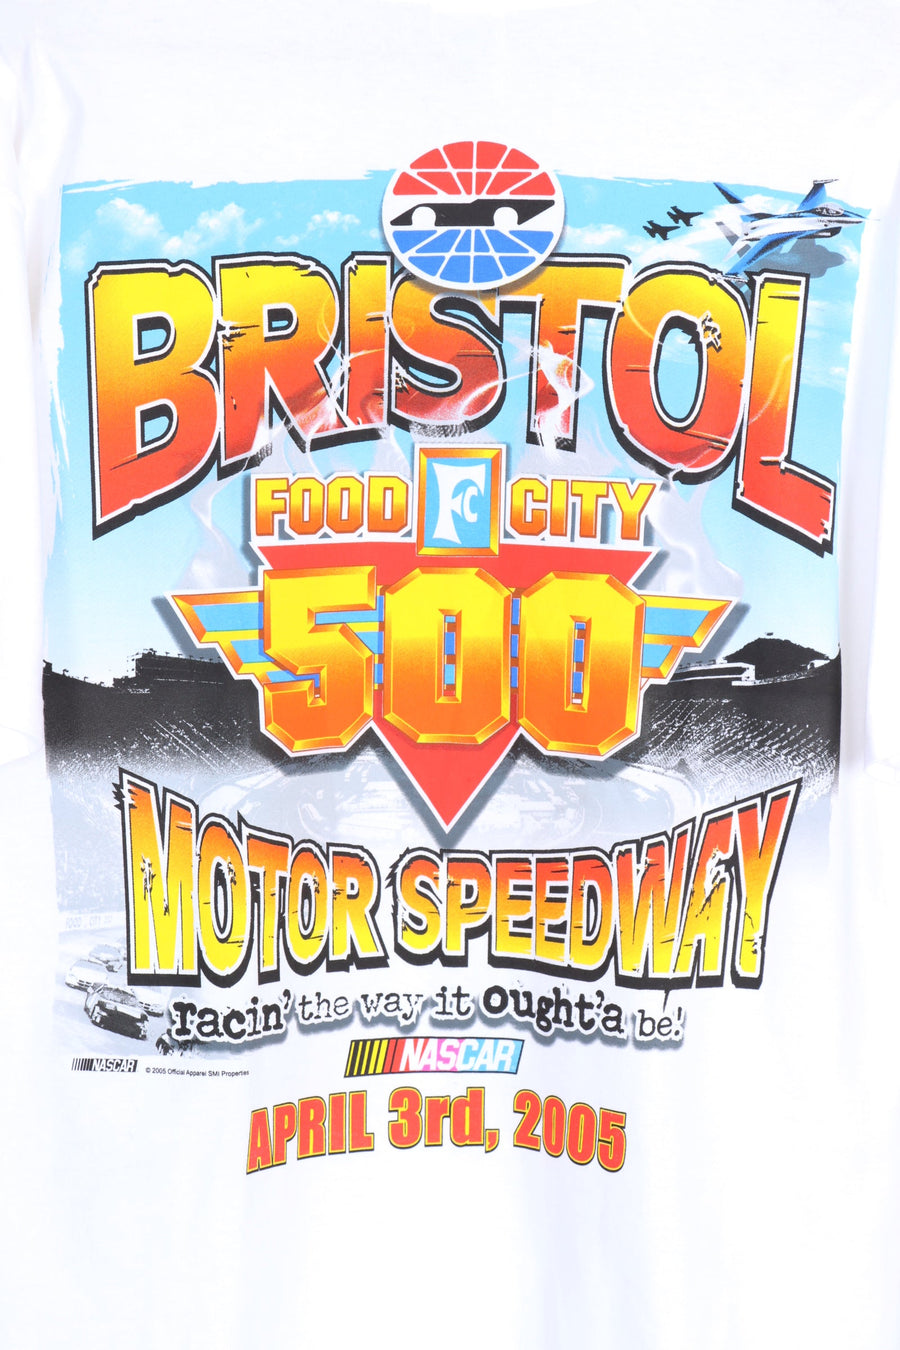 NASCAR Bristol Motor Speedway 500 Racing Colourful Car Tee (L)